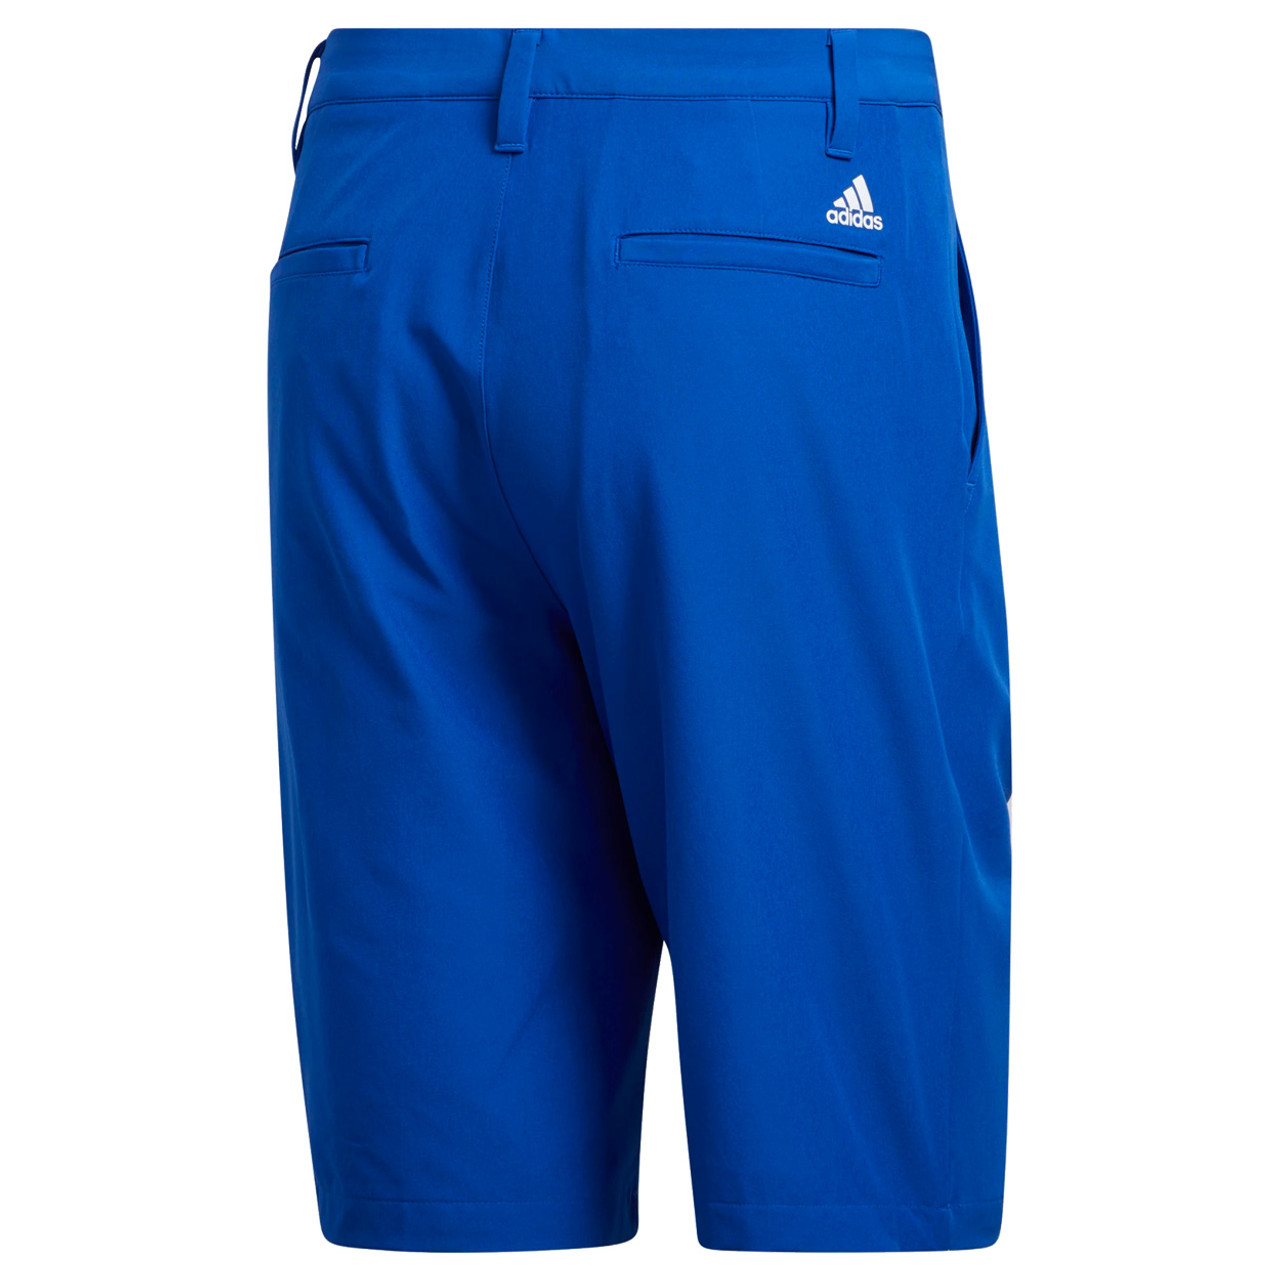 Adidas Golf Men's Ultimate 365 Golf Shorts - GolfEtail.com